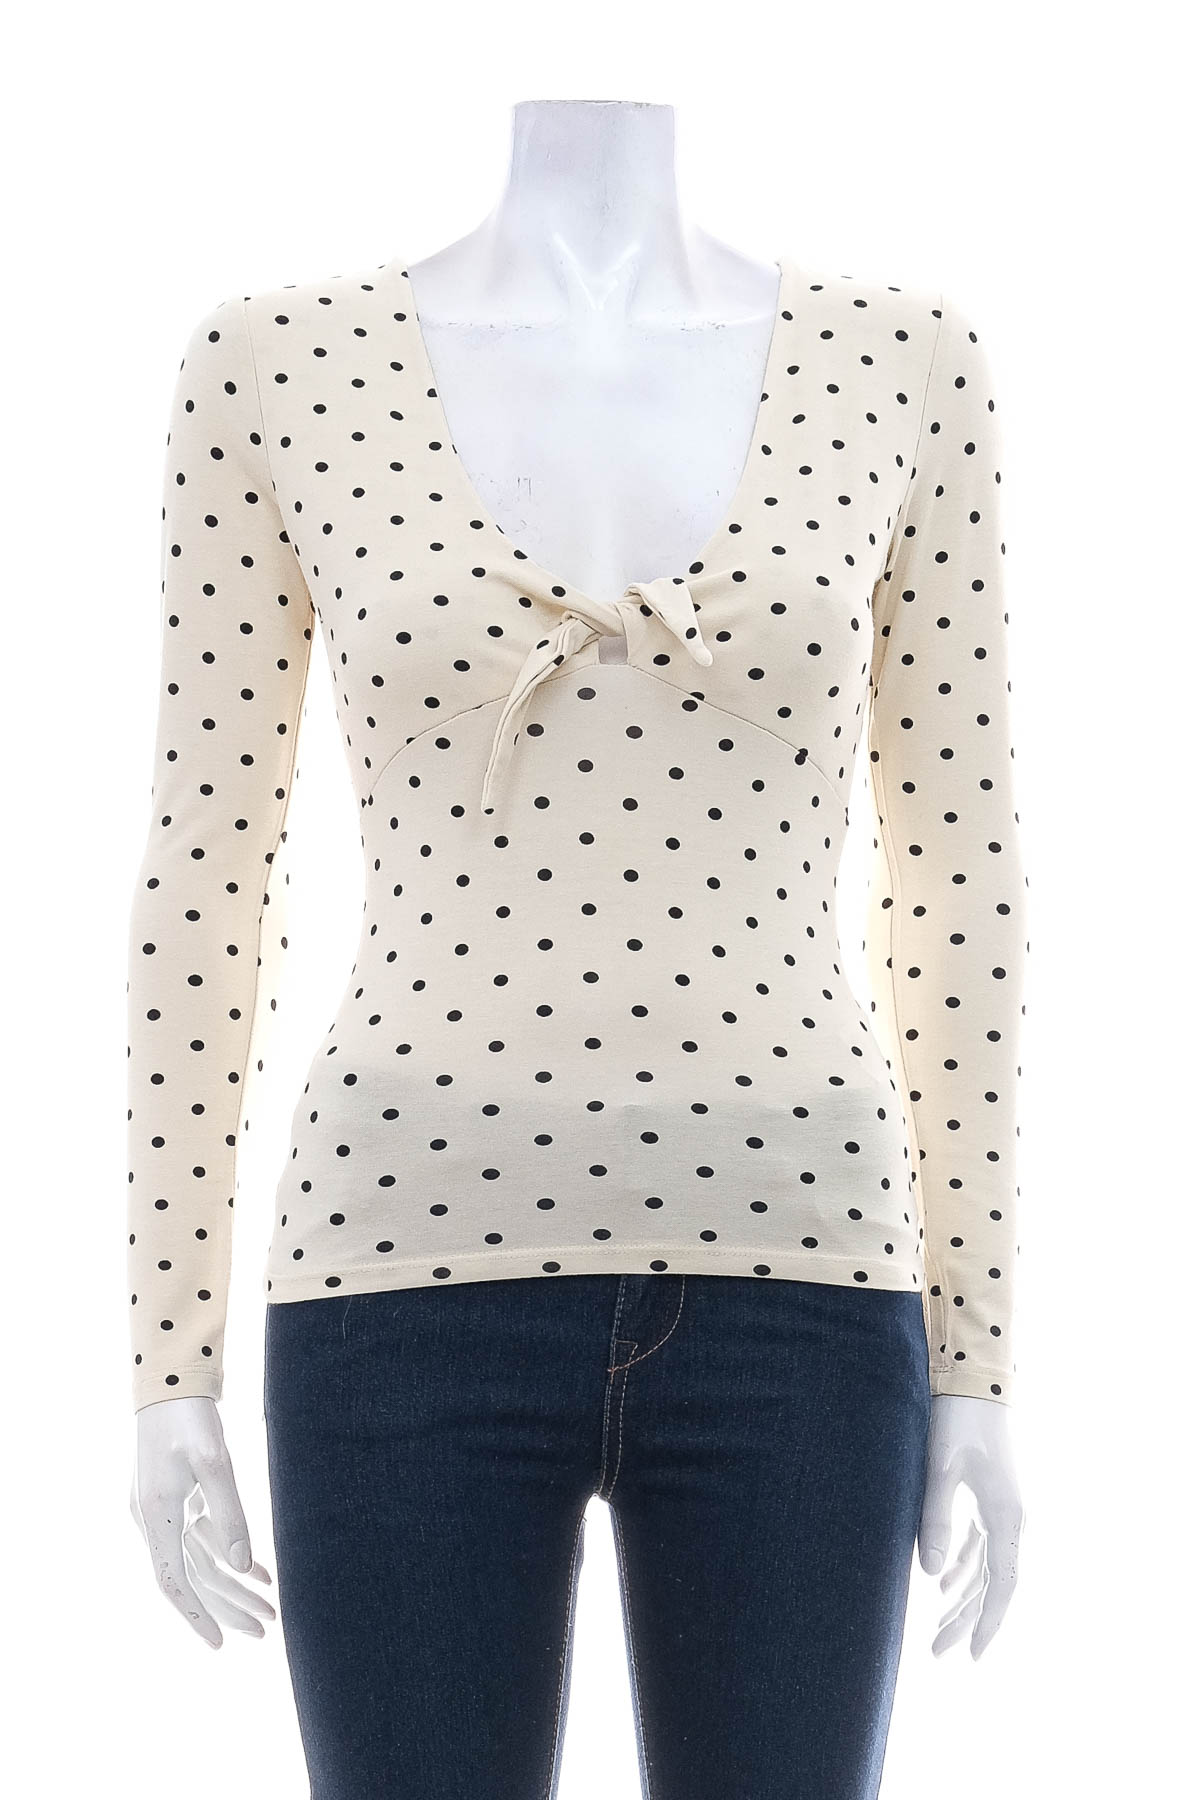 Women's blouse - Gina Tricot - 0